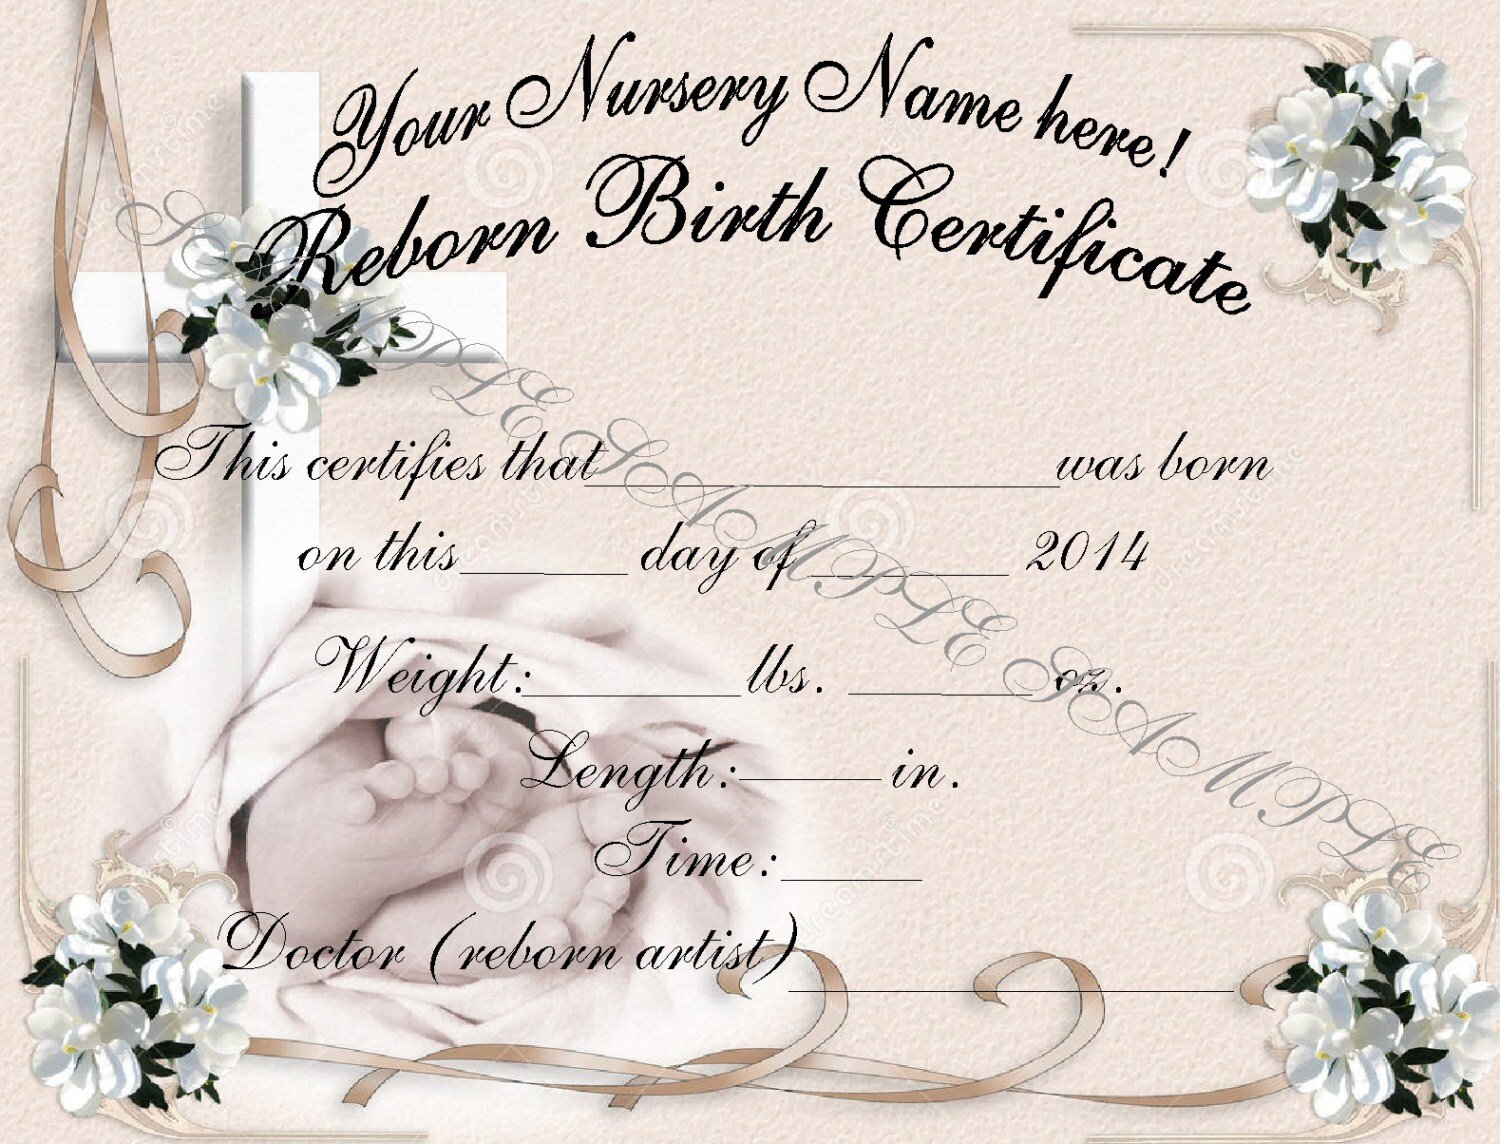 Reborn Birth Certificates Your Custom Nursery Name 5